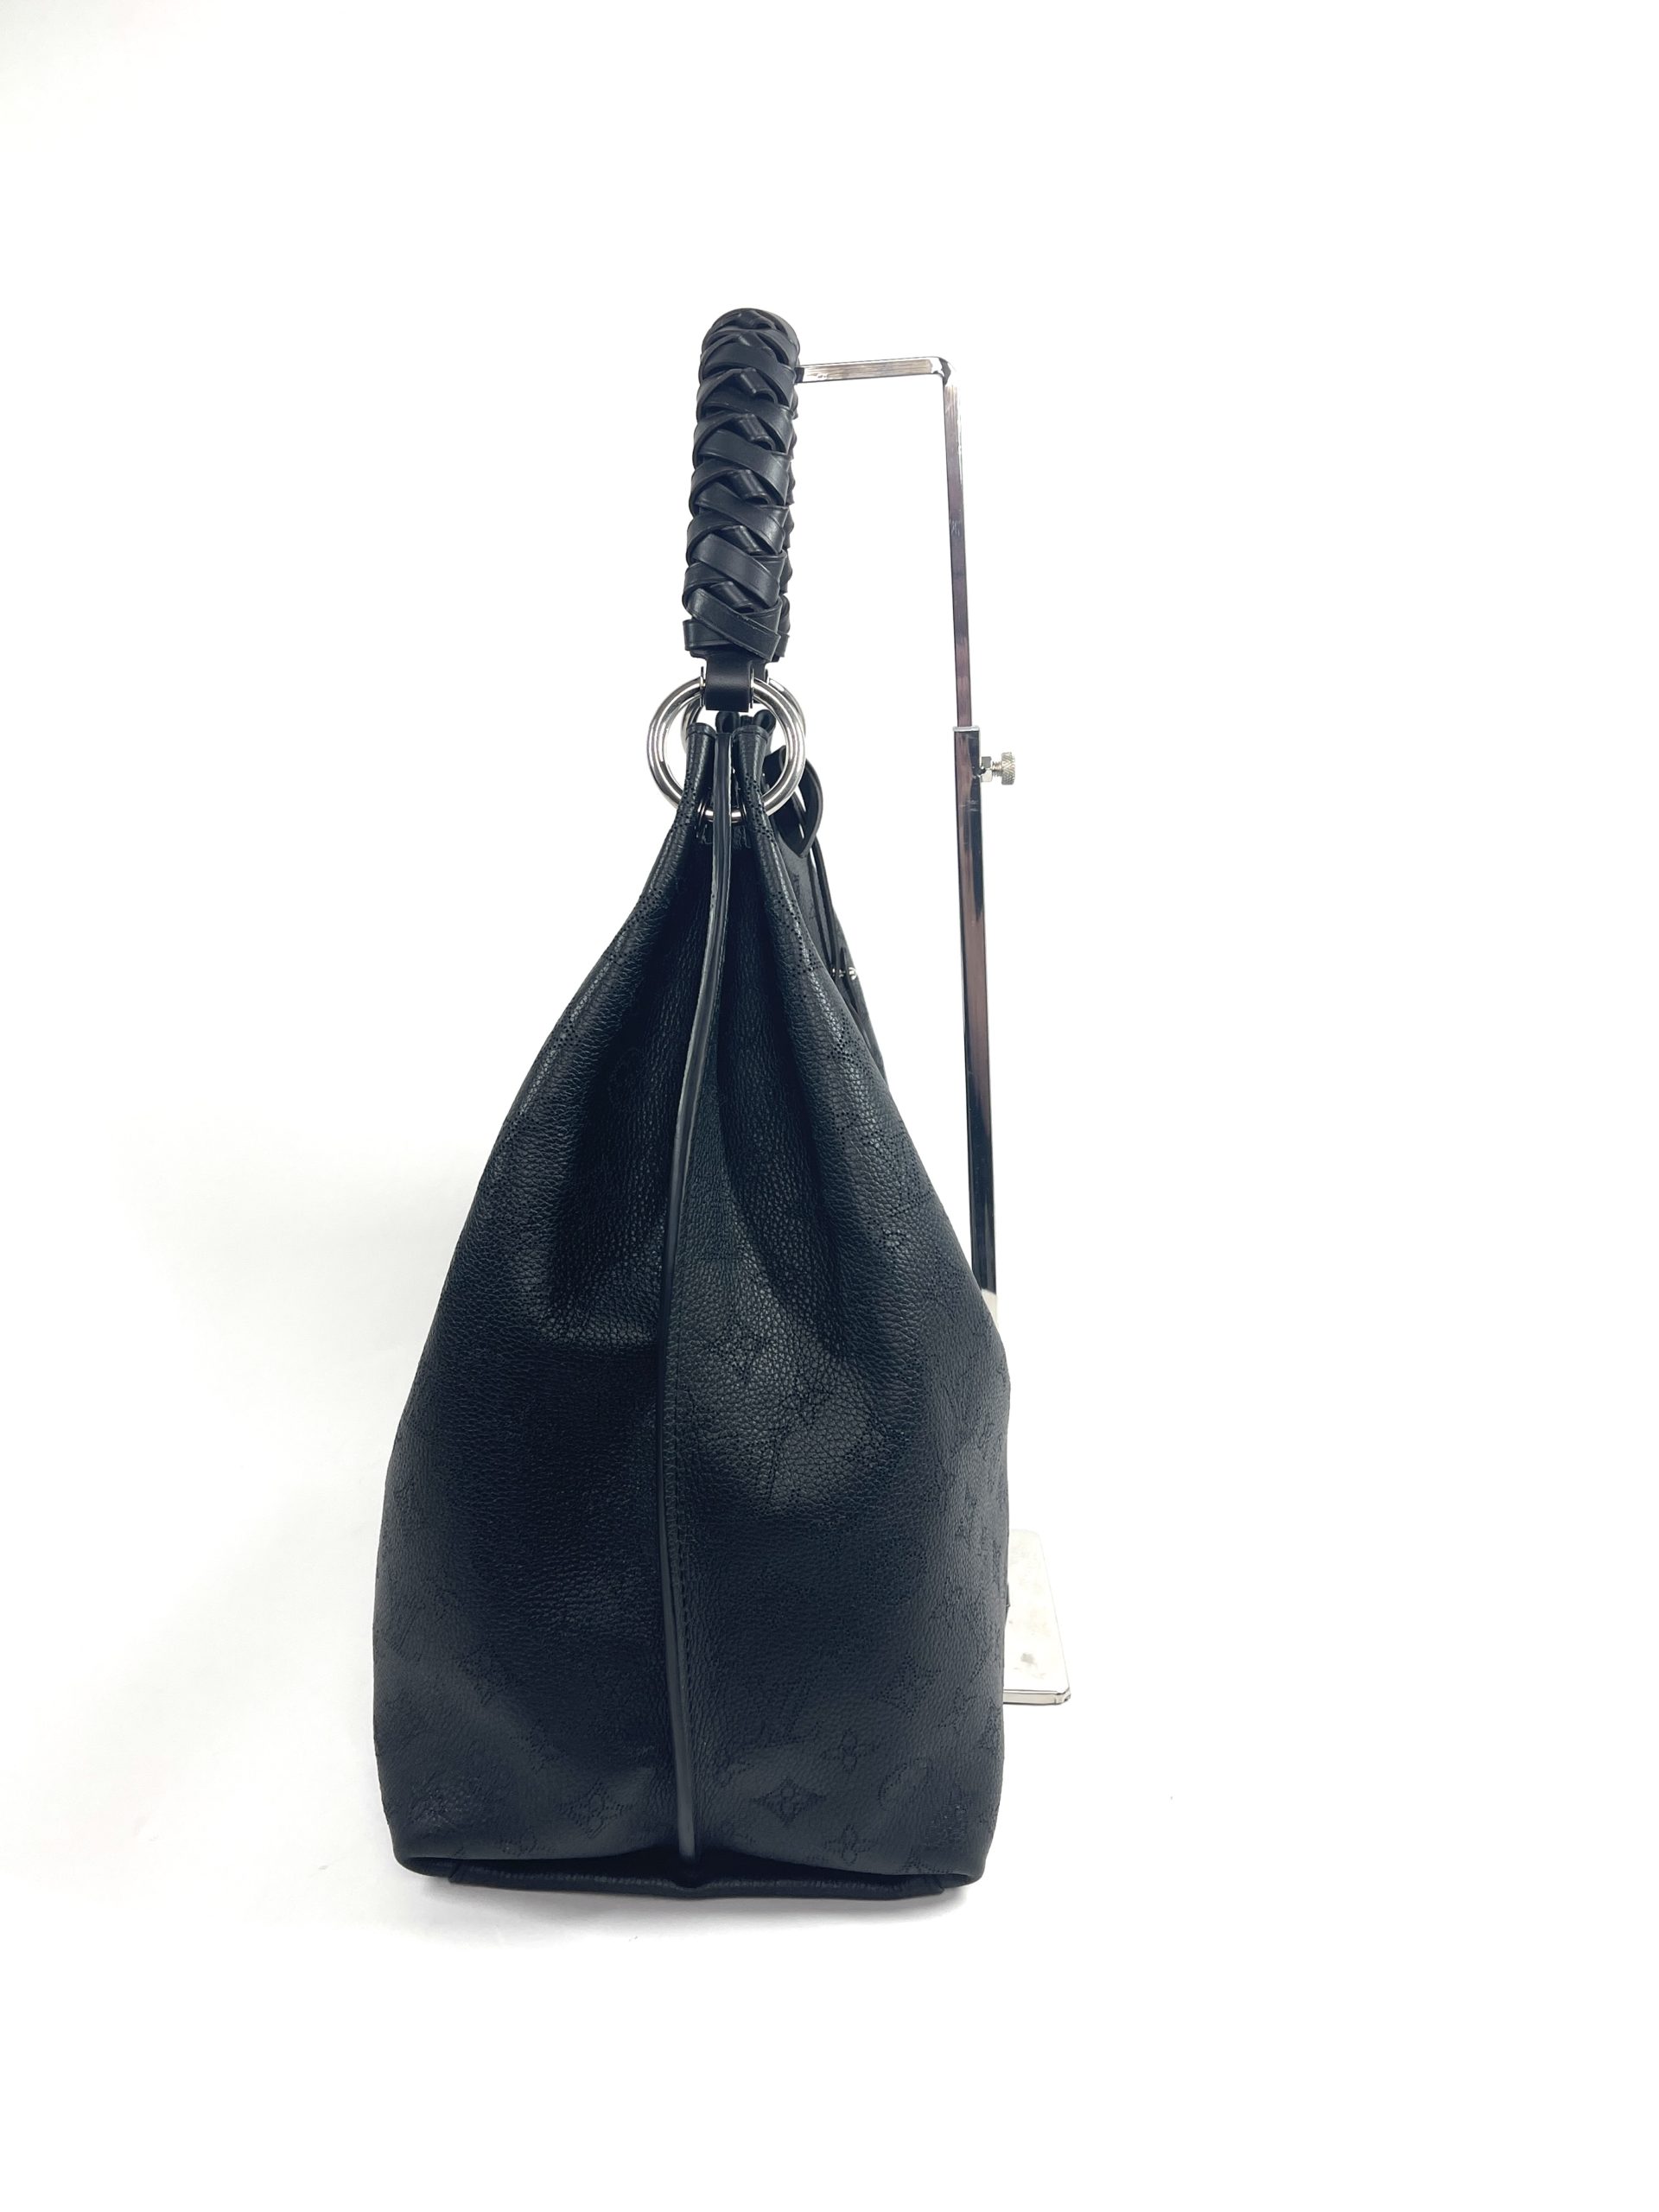 Louis Vuitton Mahina Carmel Hobo Leather Bag Black